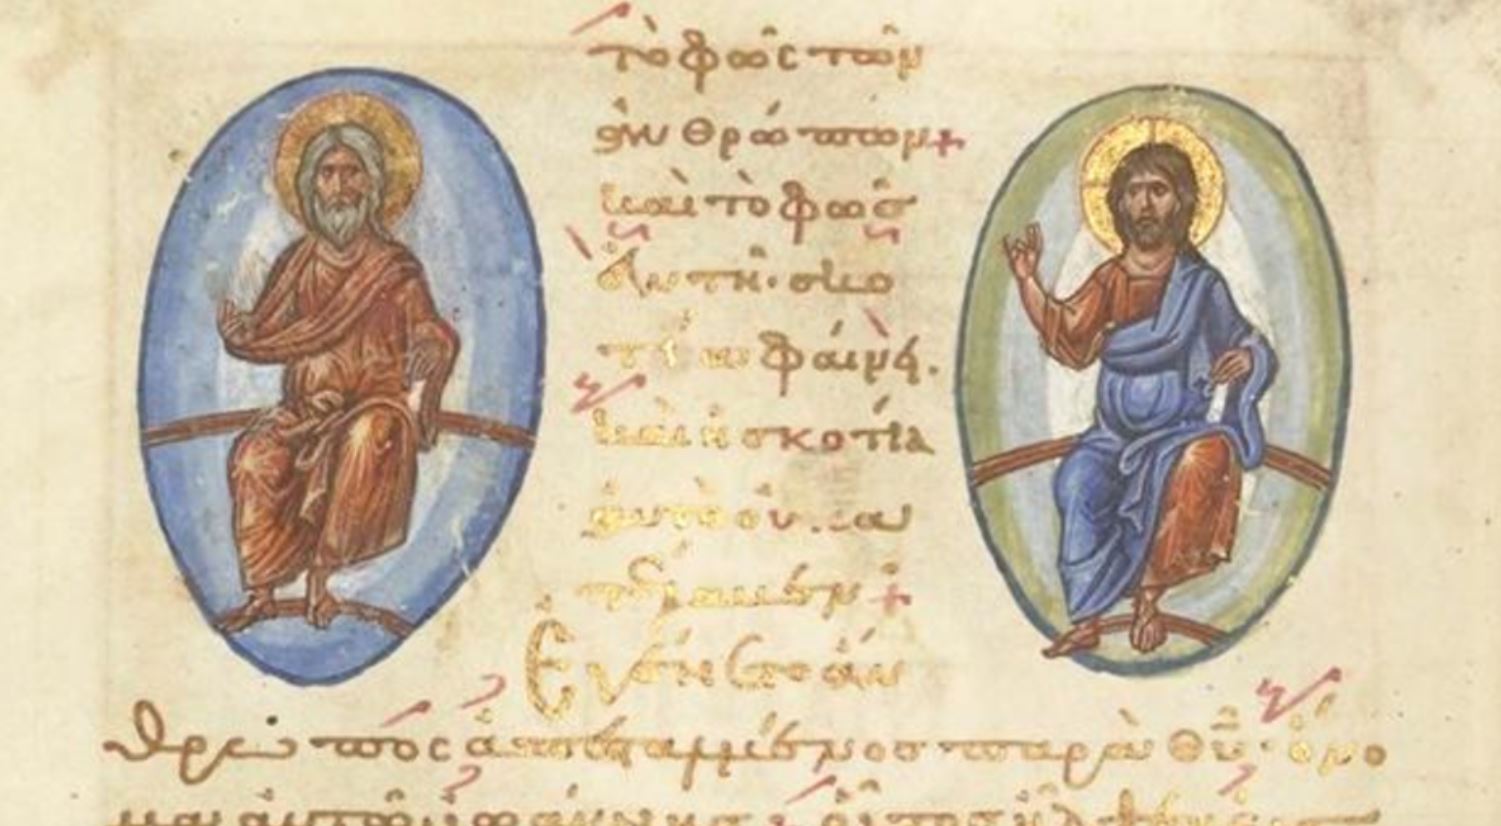 The Ancient of Days and Christ Pantokrator GospelBnF, Parisinus Graecus 64, fol. 158v. Constantinople, eleventh century